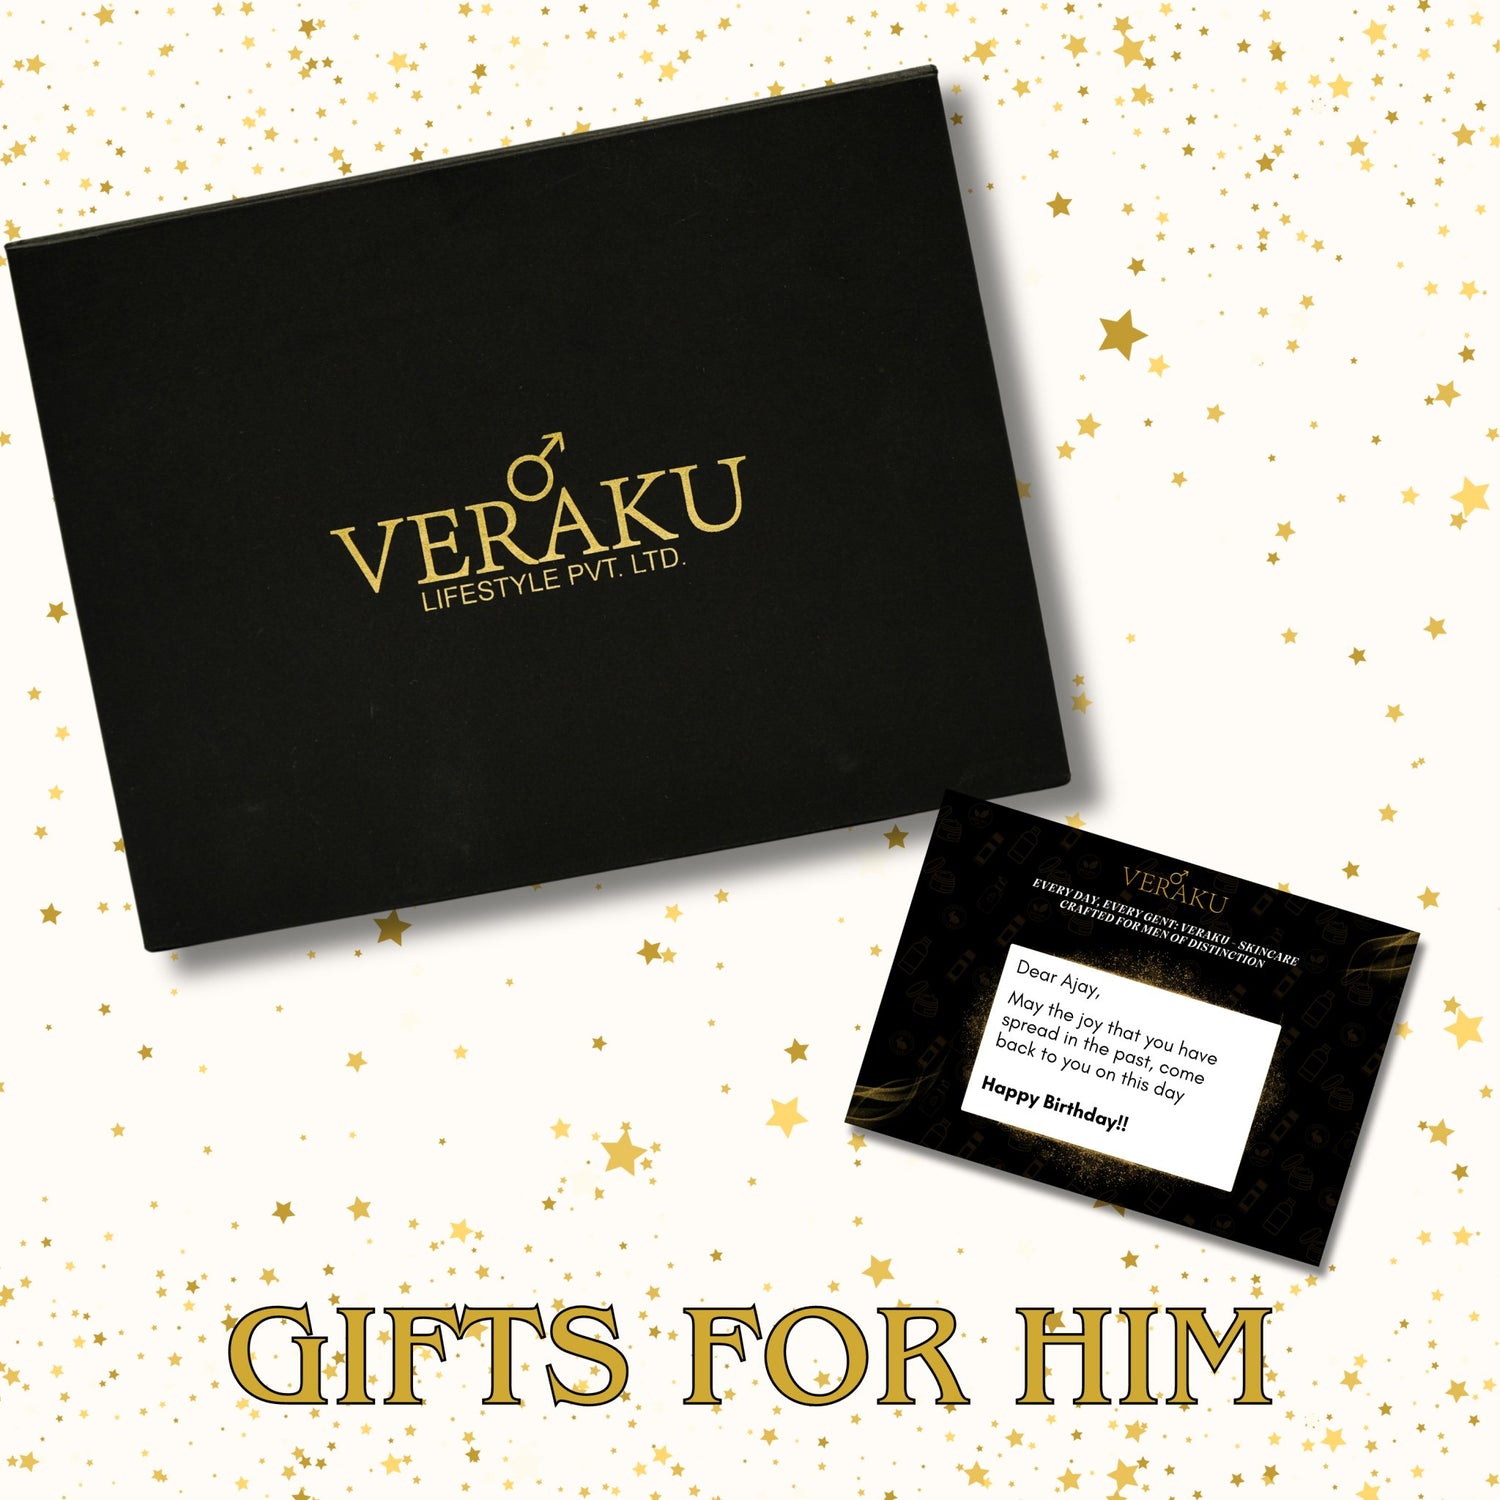 Gifts for Him - Veraku